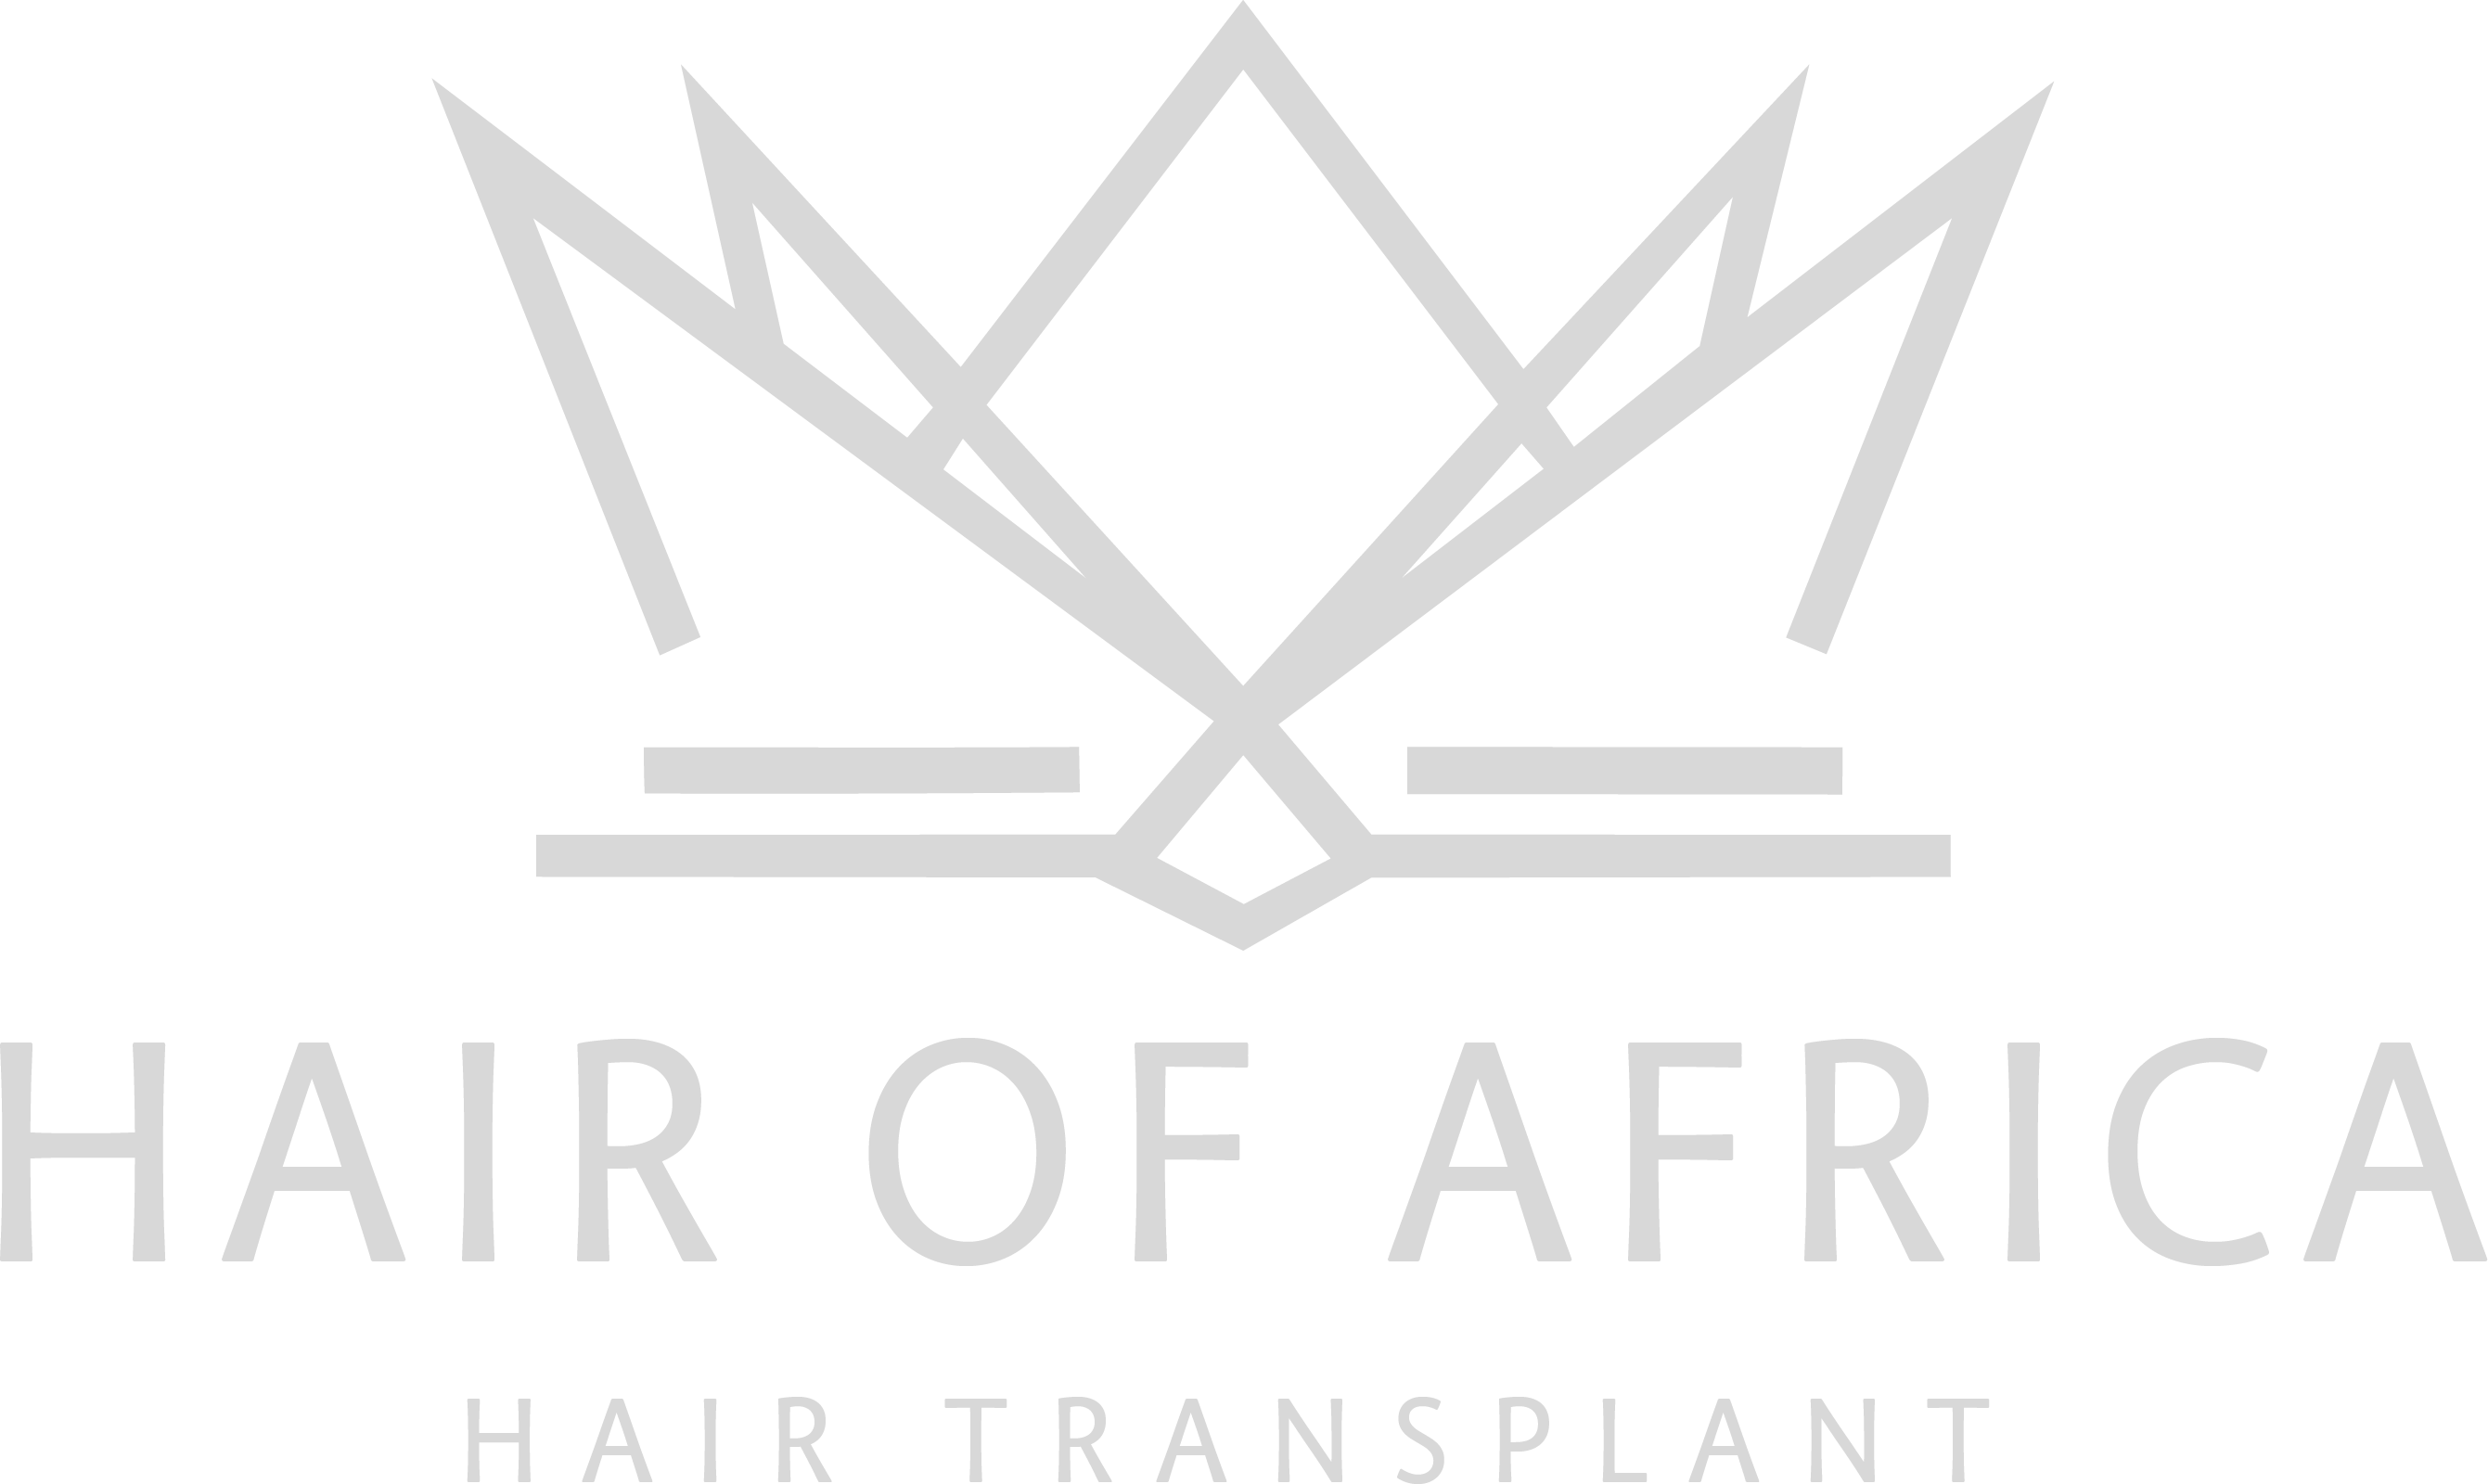 Hair of Africa